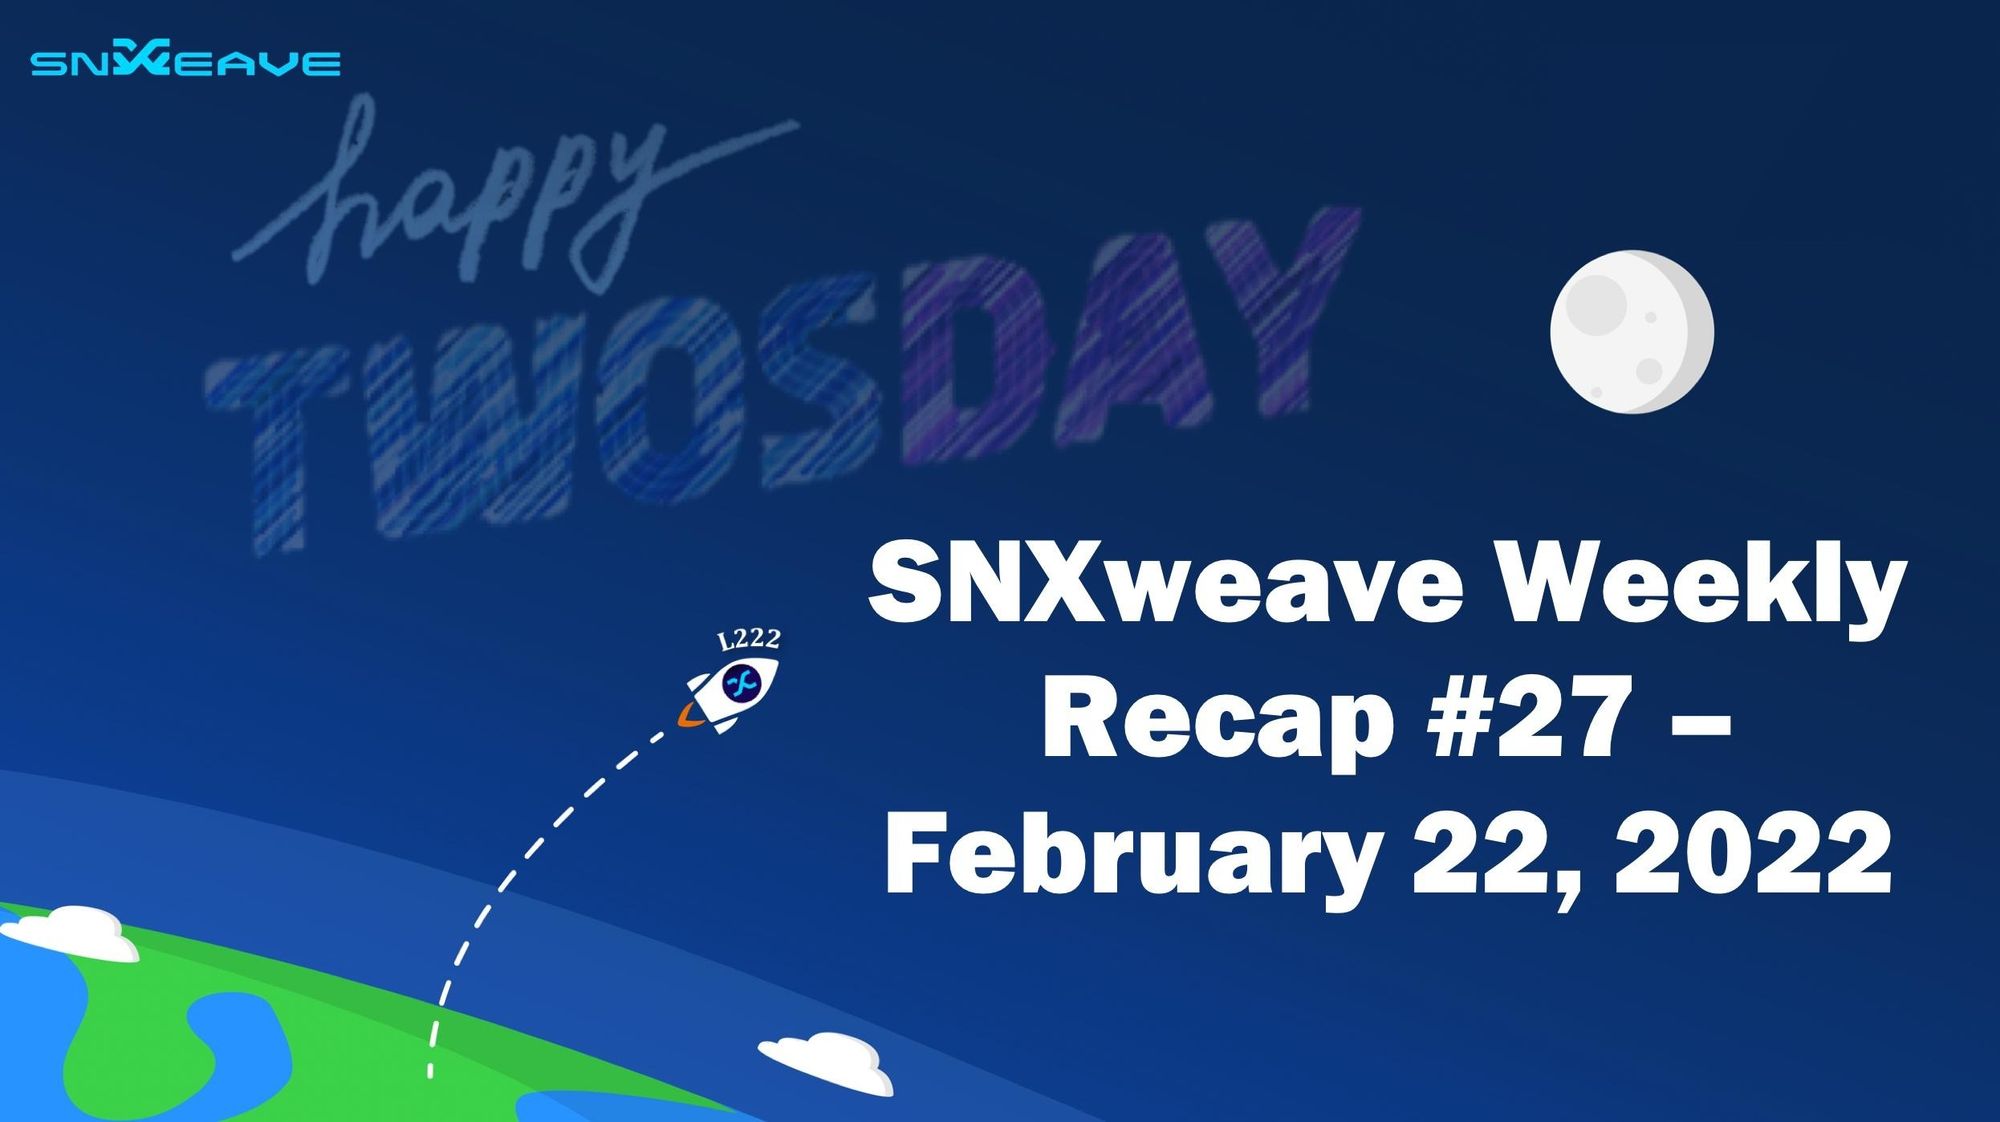 SNXweave Weekly Recap 27